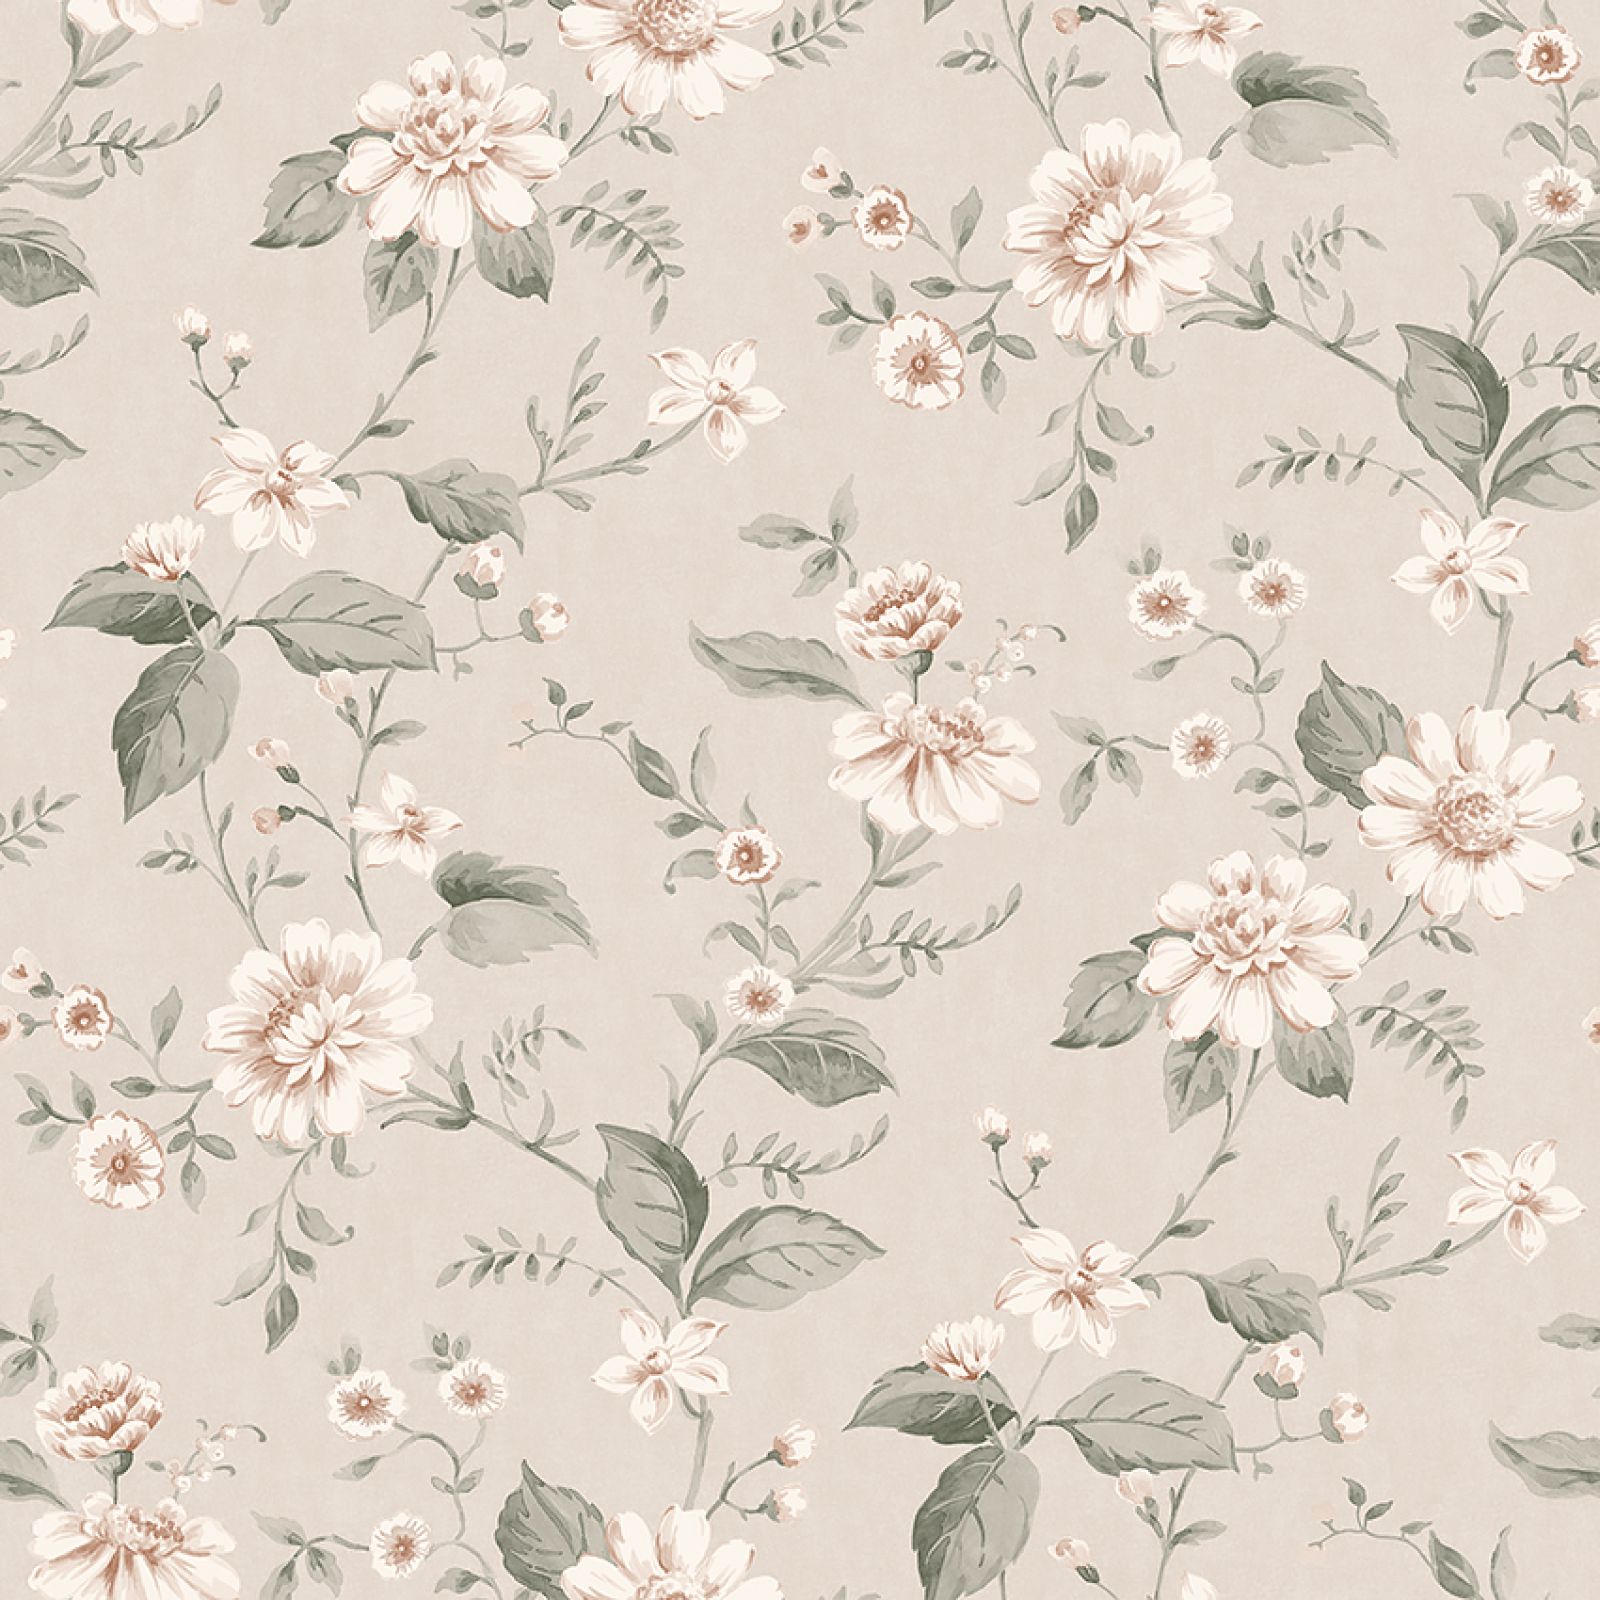 Laura’s Cottage Flowers wallpaper